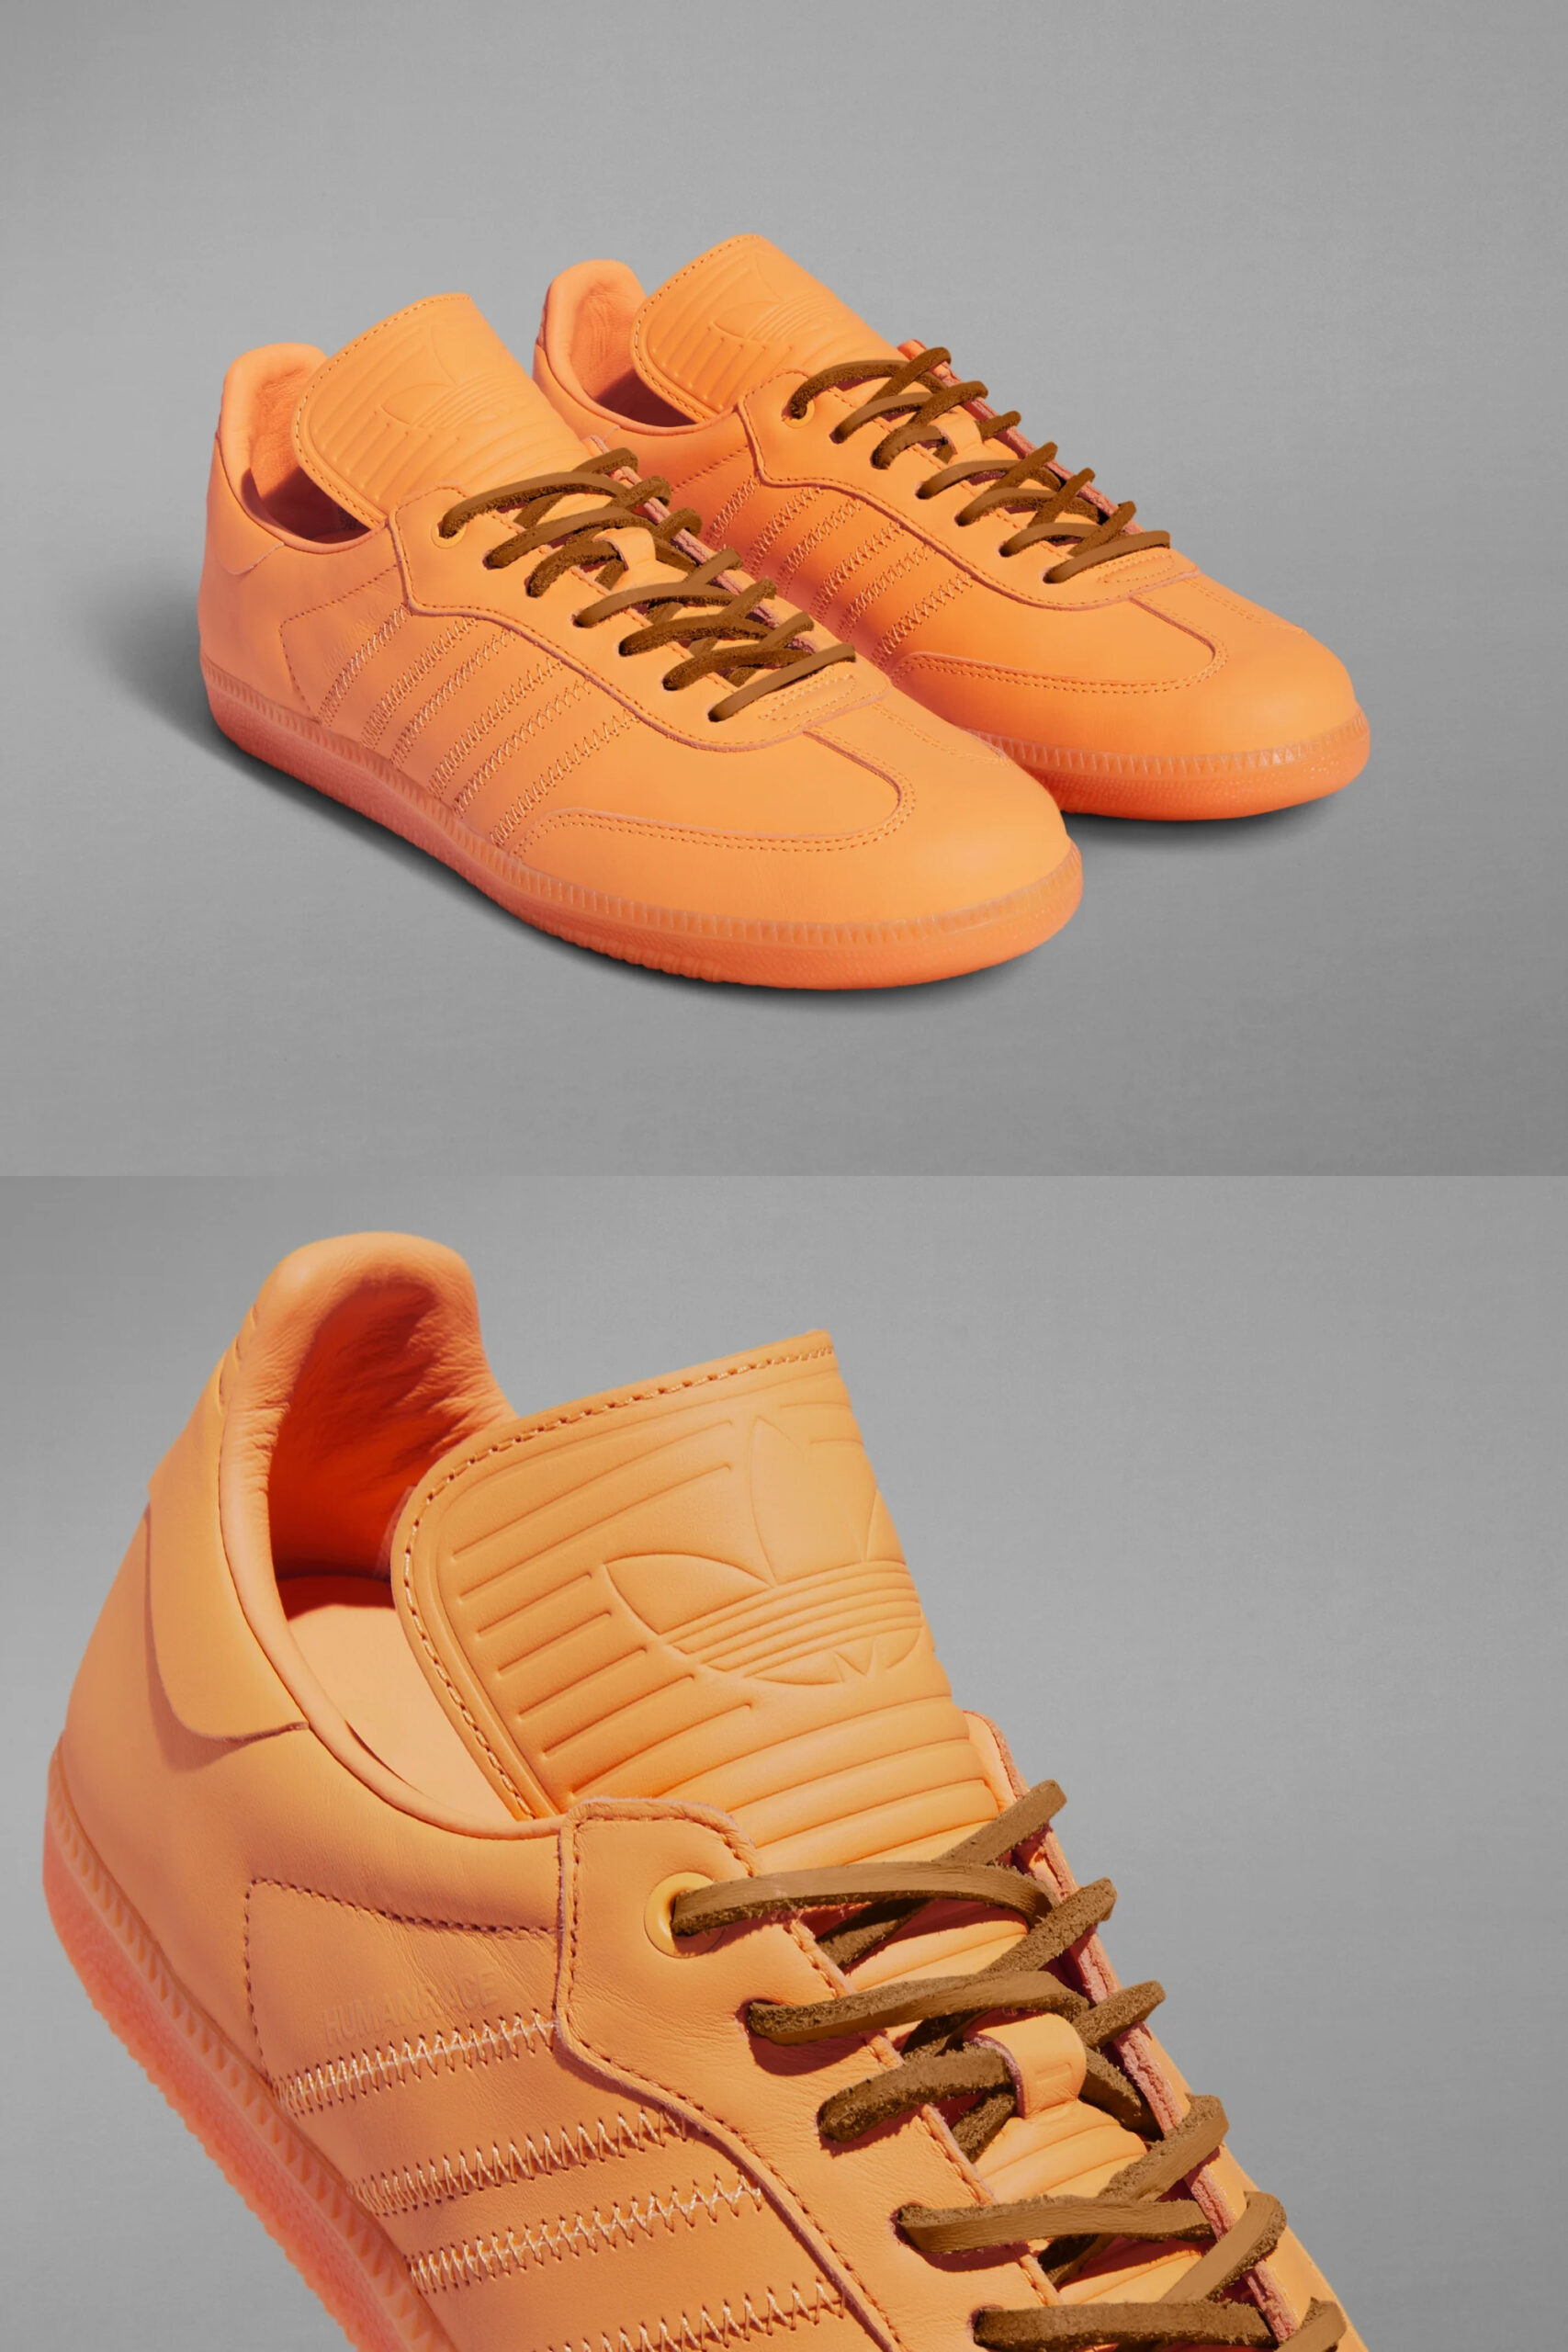 adidas x Pharrell Williams Samba Humanrace Orange sneakers